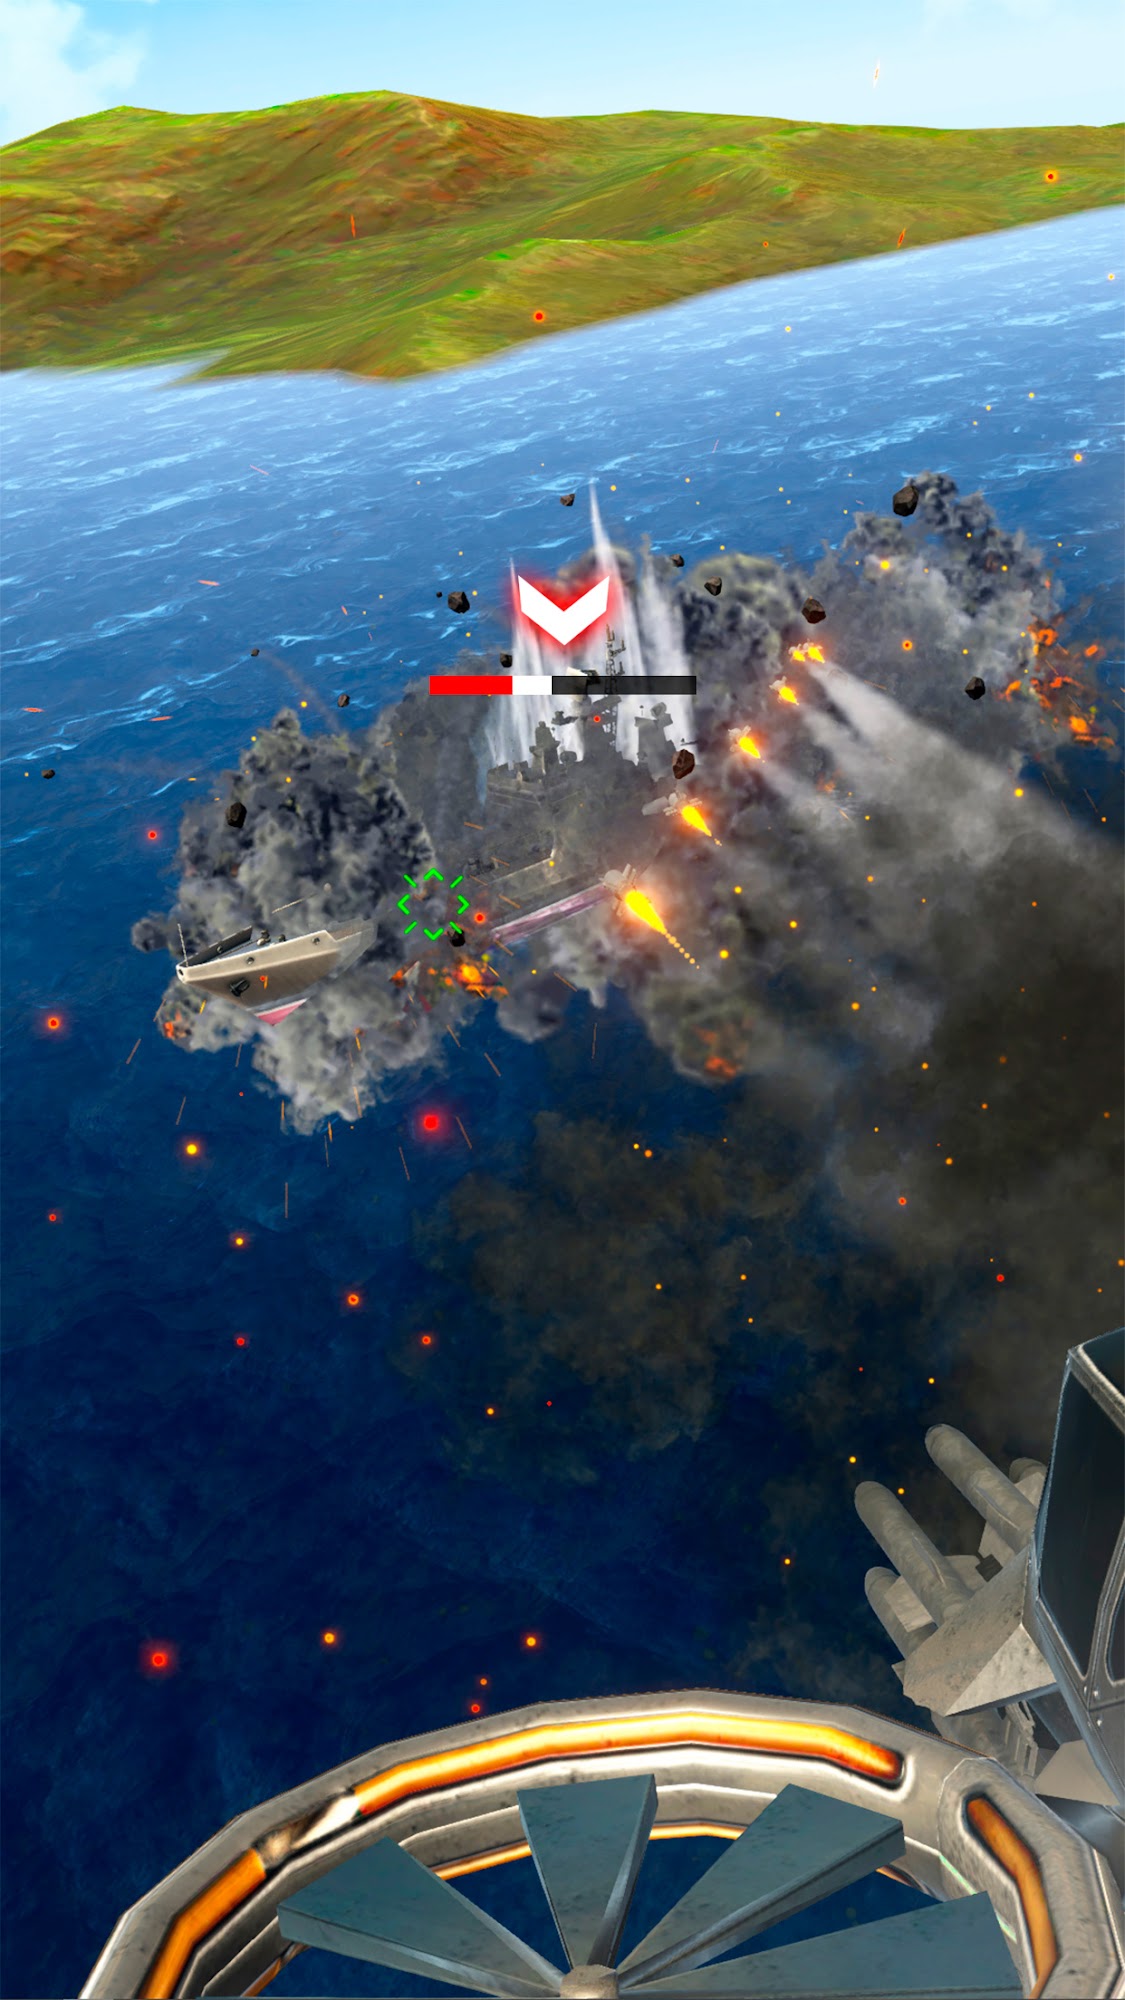 Drone Attack 3D: Sea Warfare - Android game screenshots.